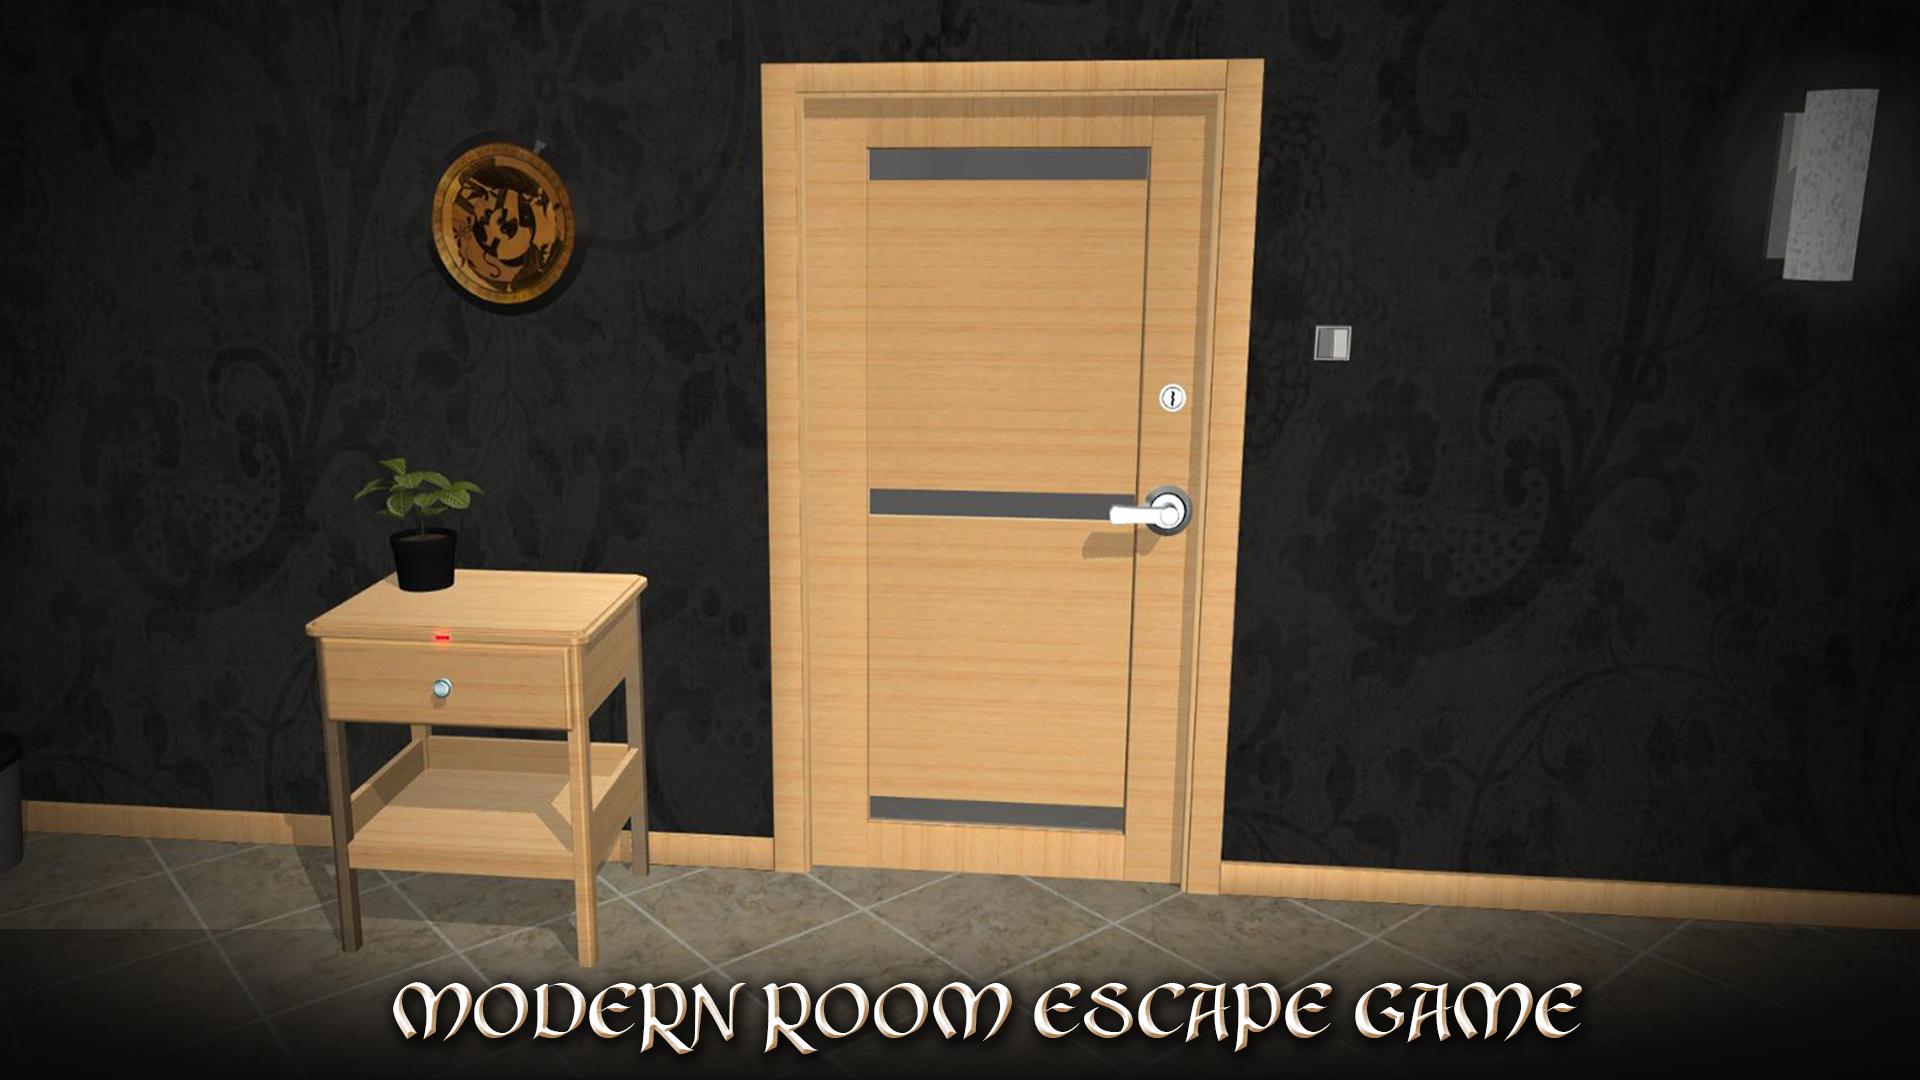 Игры 10 комнат. Комнаты испытание побегом. Узел в игре Room Escape. Игра Escape Rooms на Android. 50 Tiny Room Escape 10.